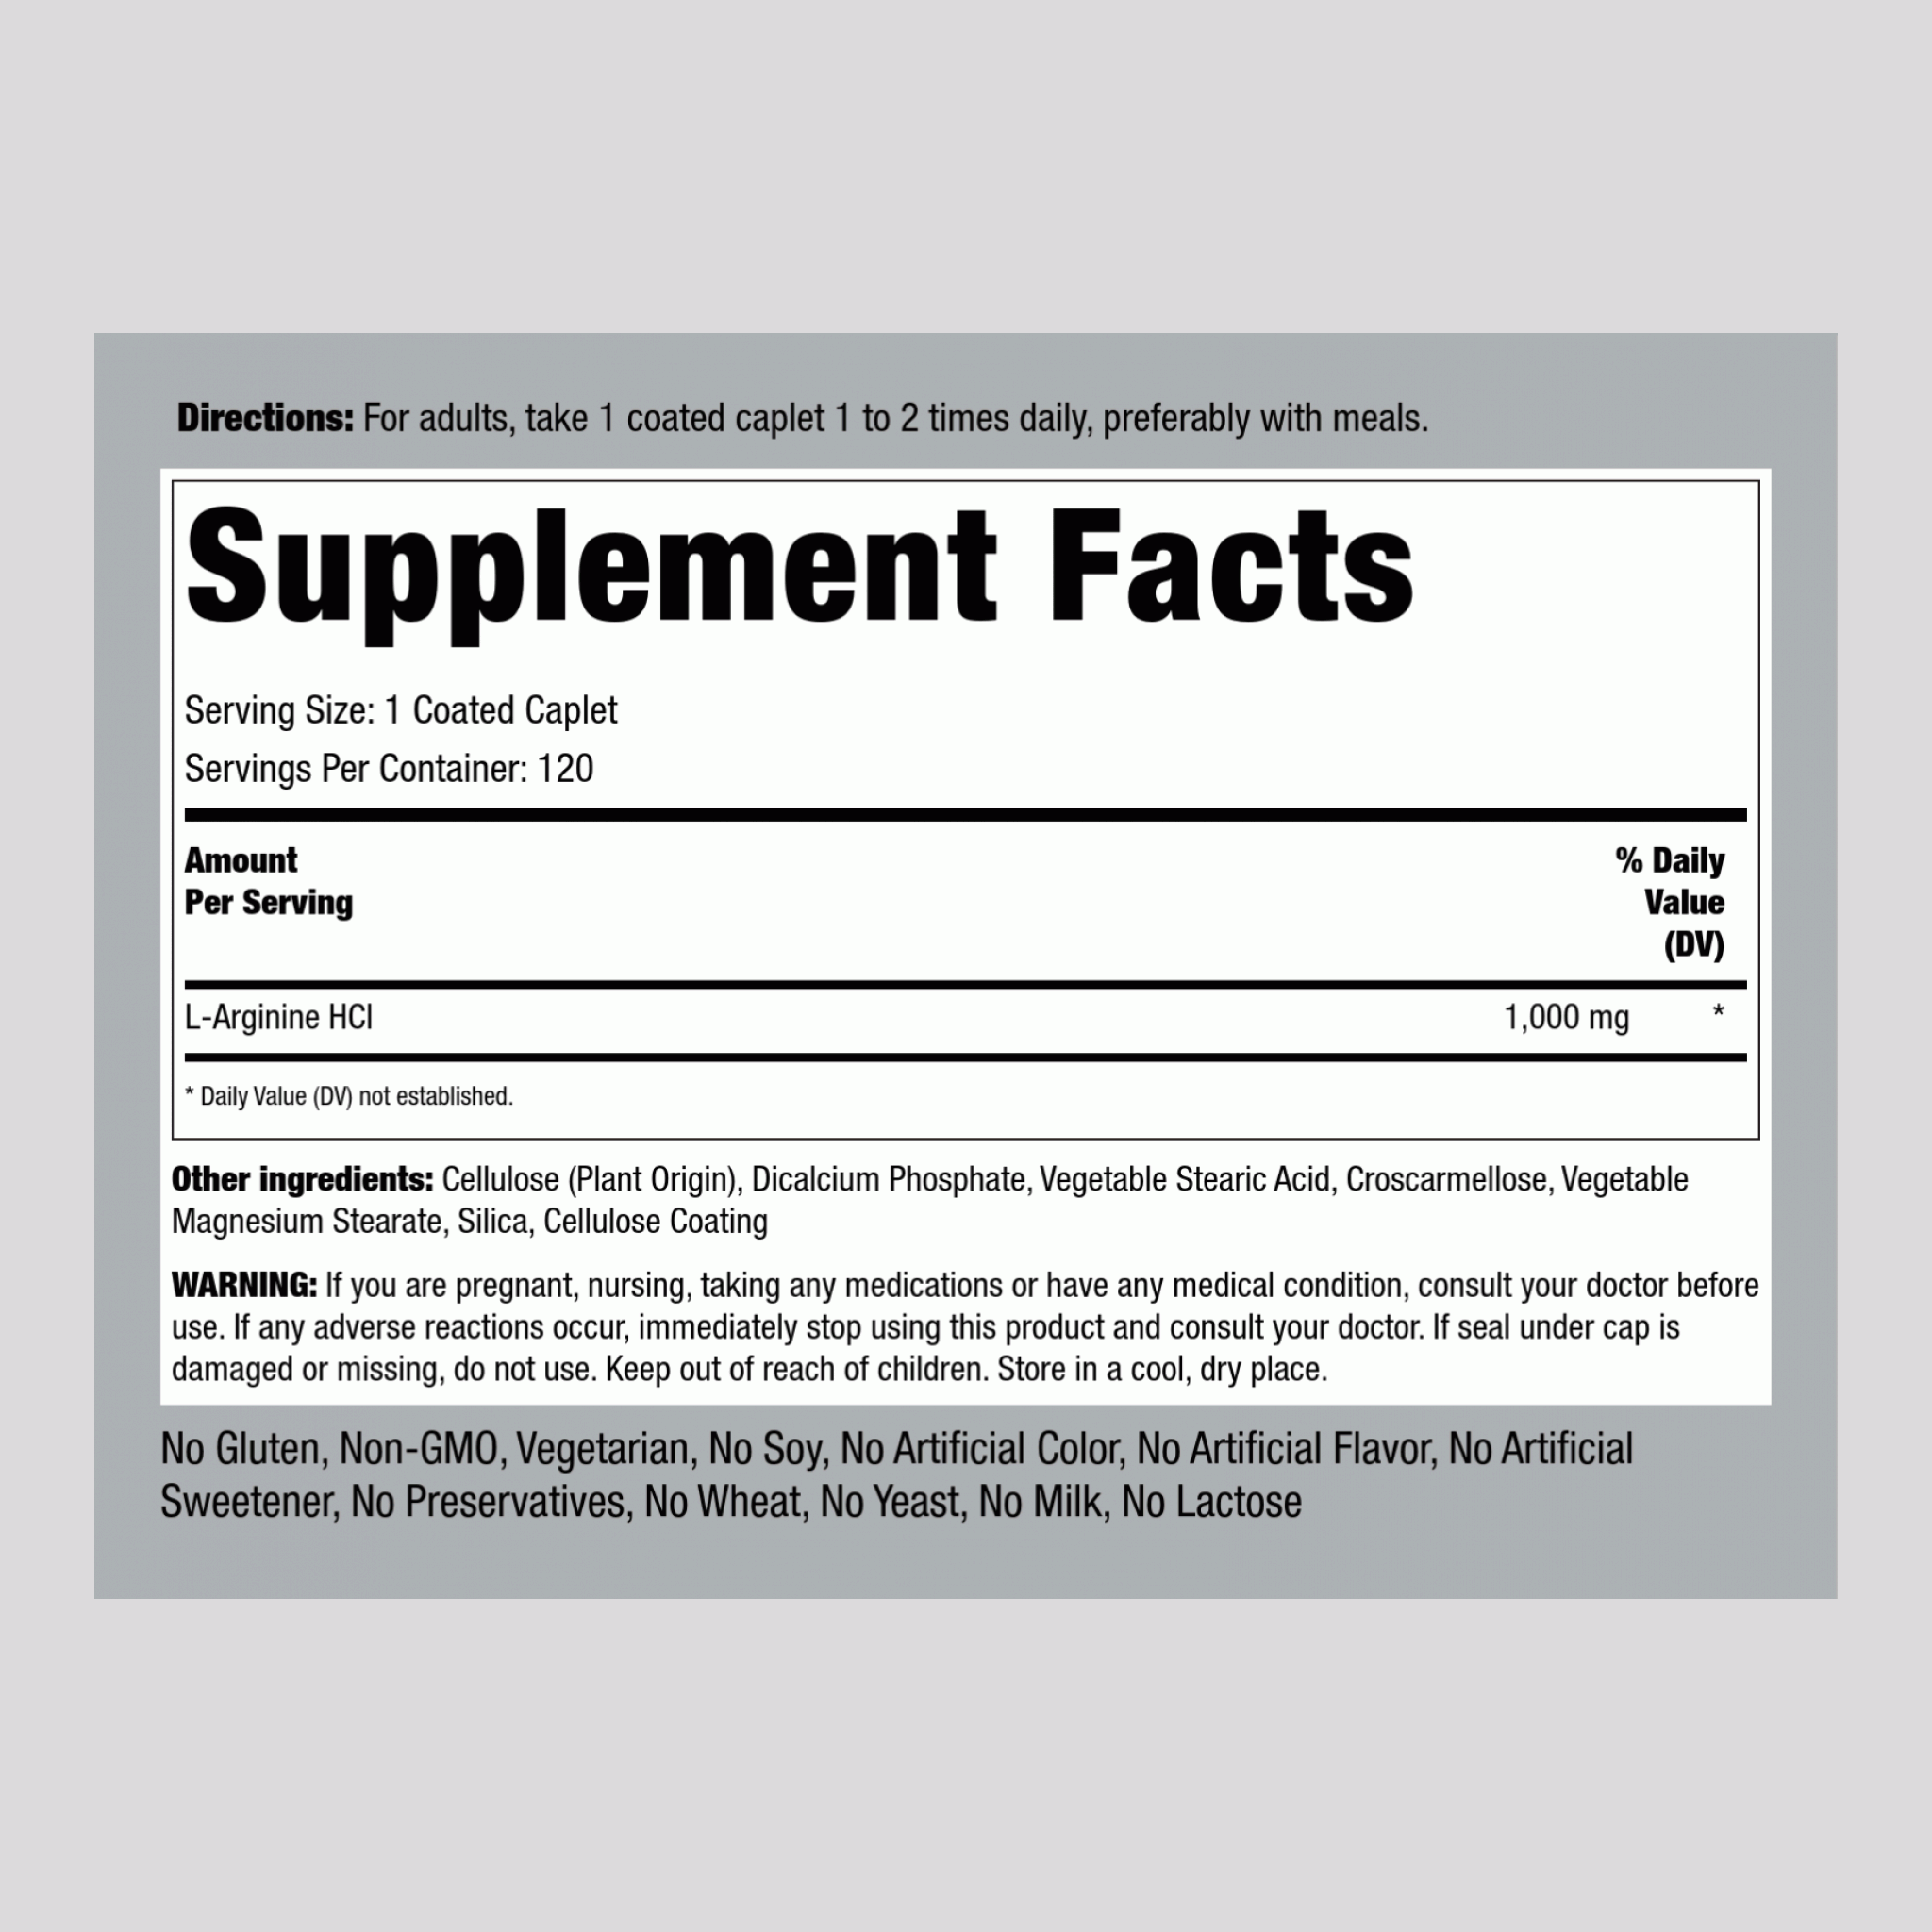 Mega Strength L-Arginine HCL, 1000 mg, 120 Coated Caplets